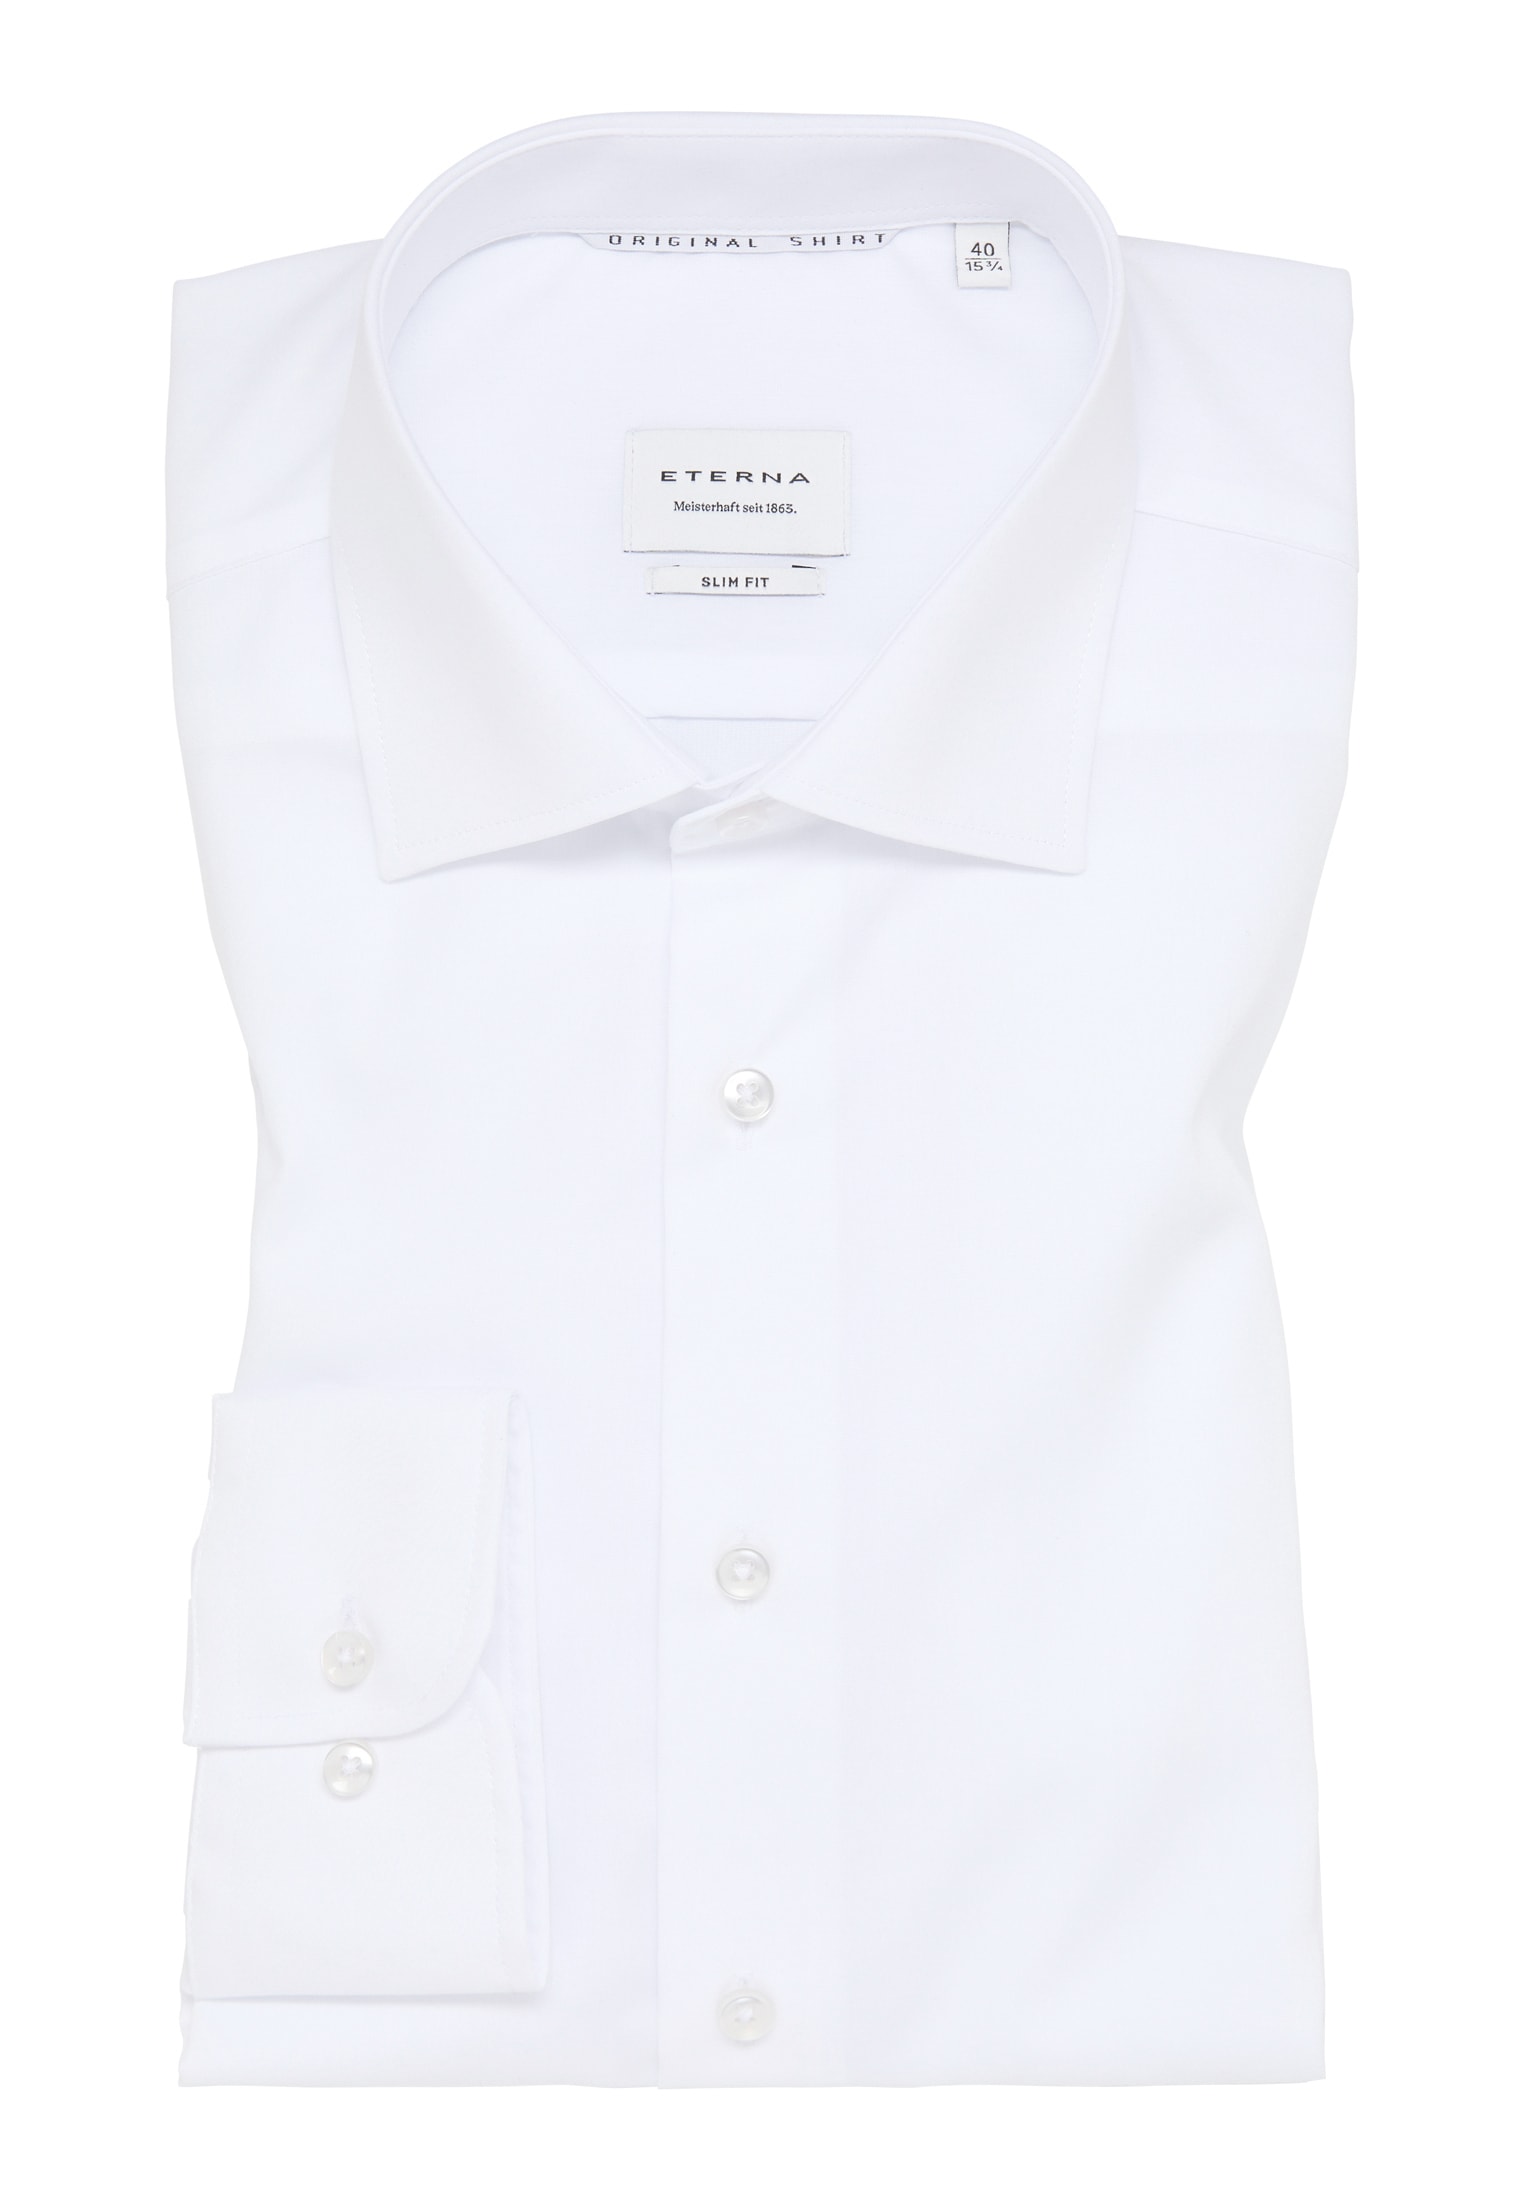 | | Shirt | Langarm weiß in | FIT unifarben 1SH12598-00-01-40-1/1 Original weiß SLIM 40